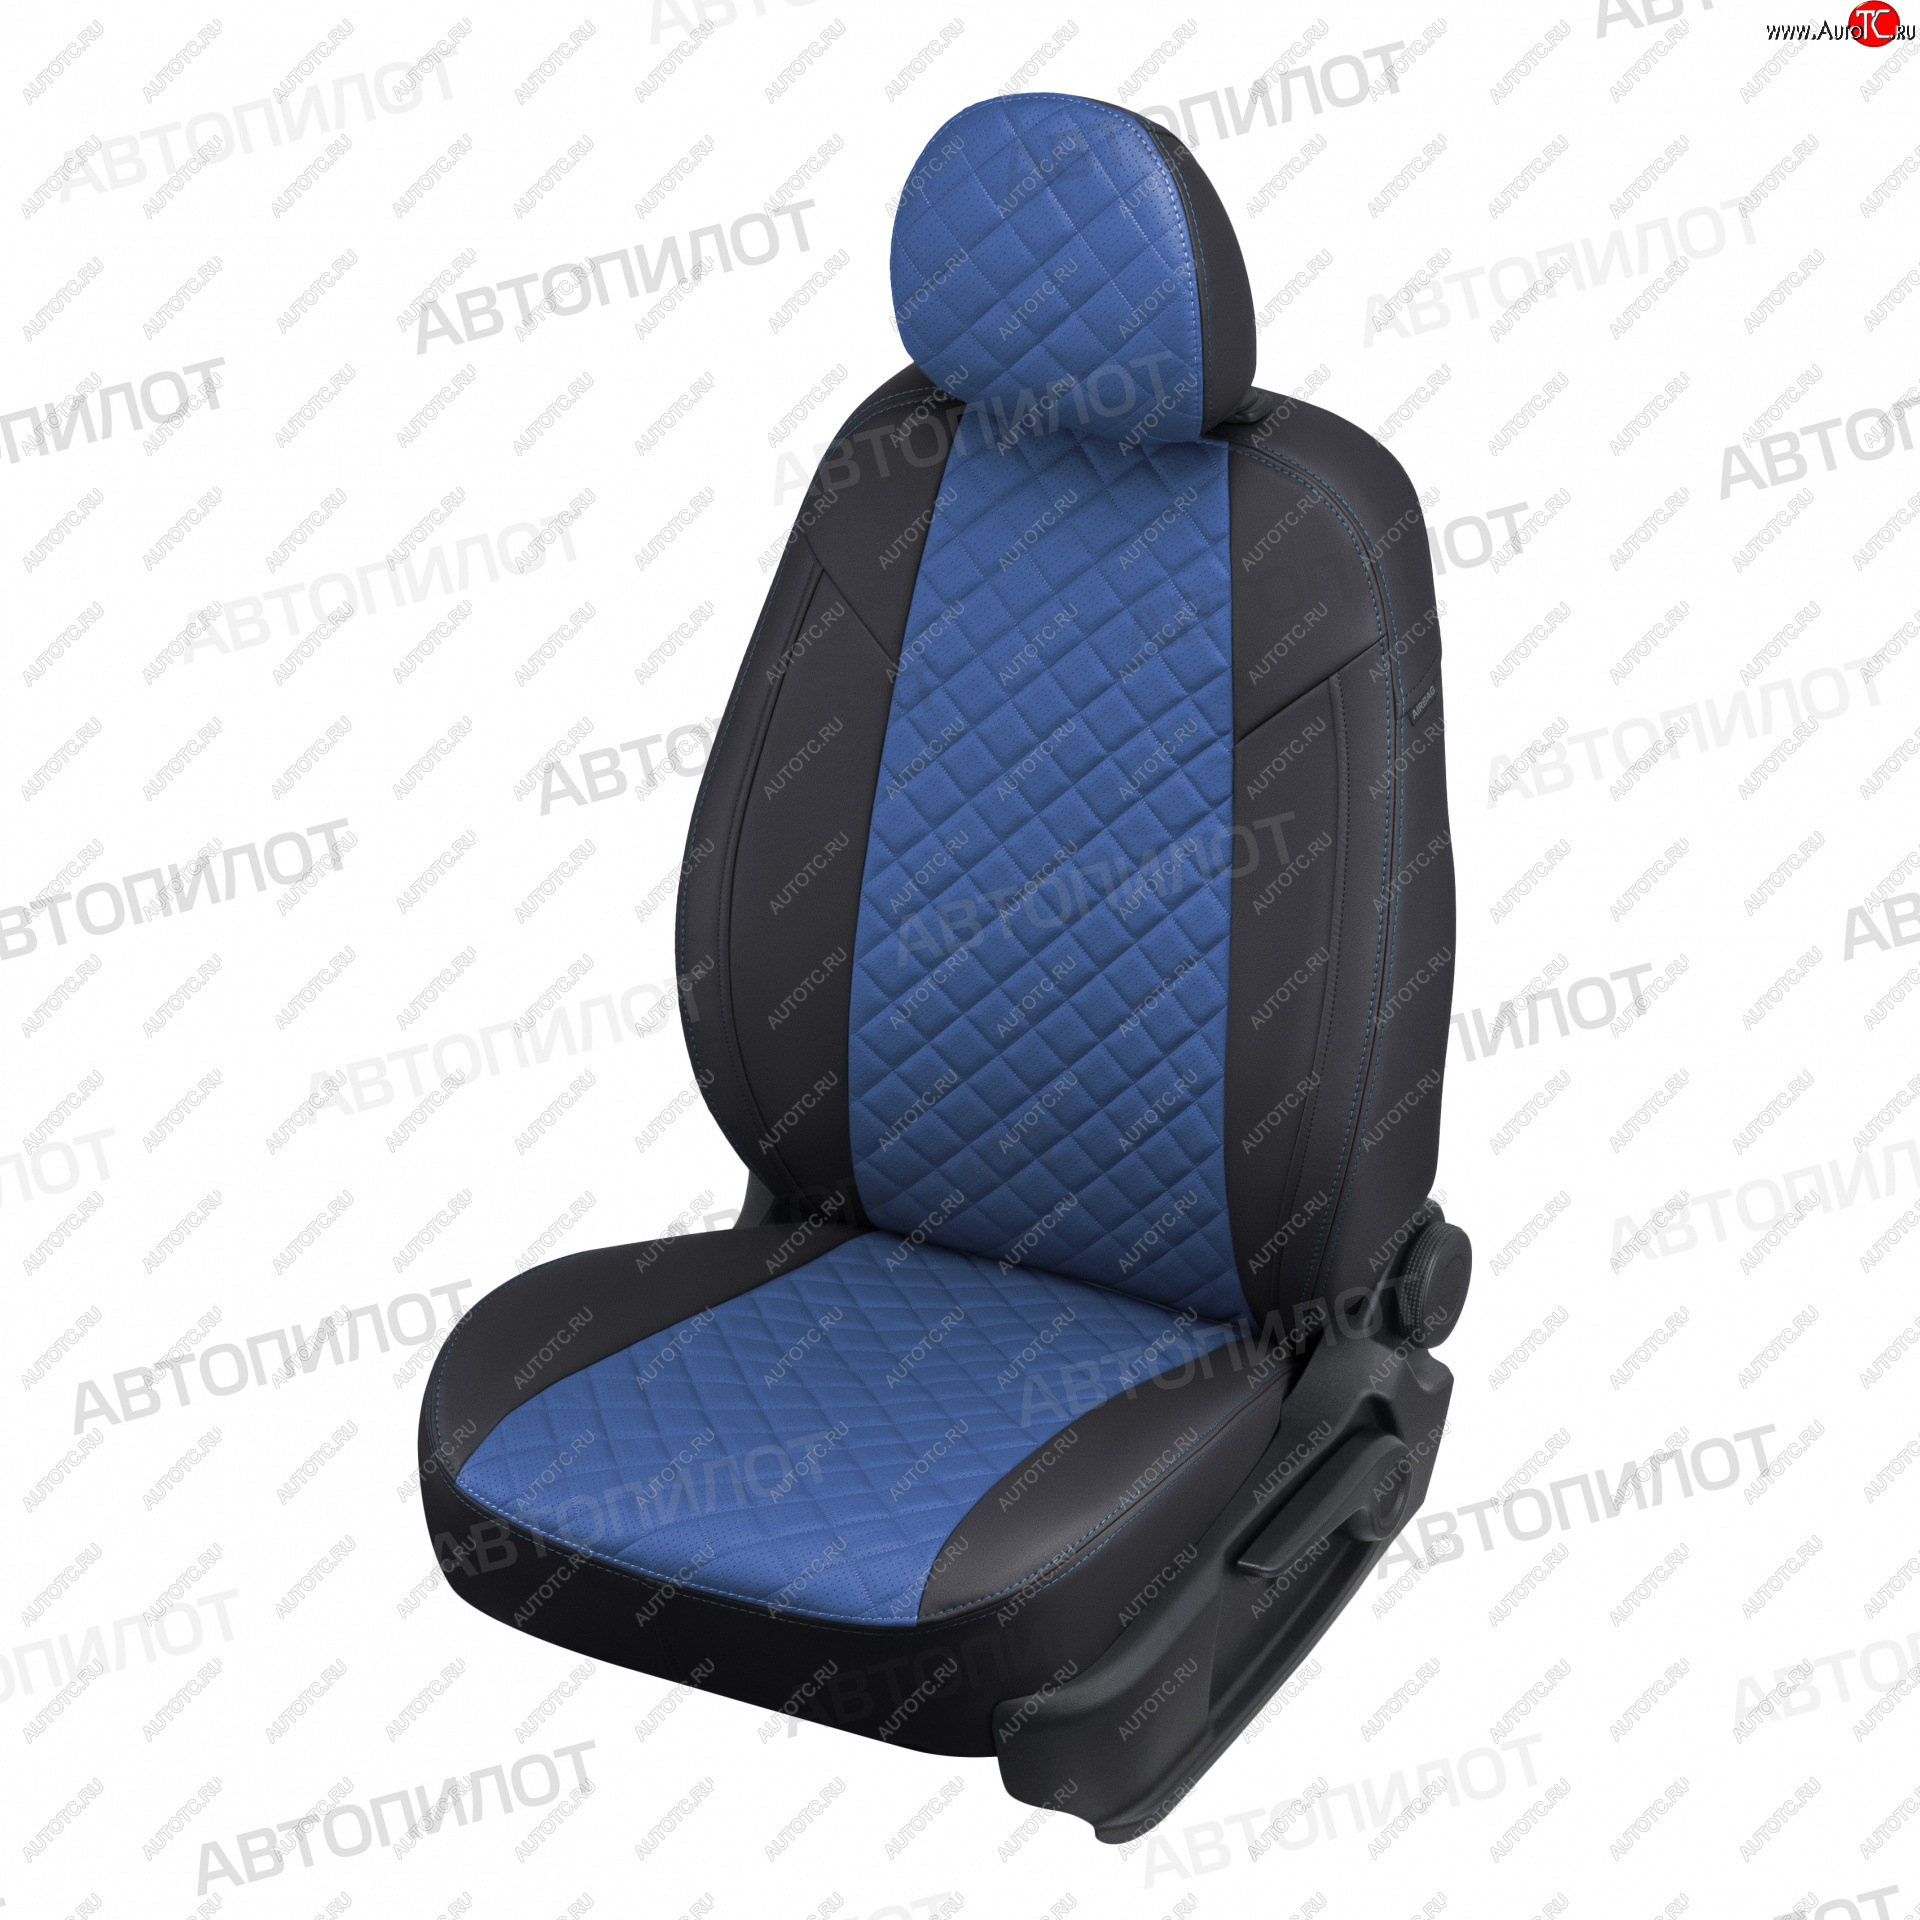 13 999 р. Чехлы сидений (экокожа) Автопилот Ромб  KIA Sportage  3 SL (2010-2016) (черный/синий)